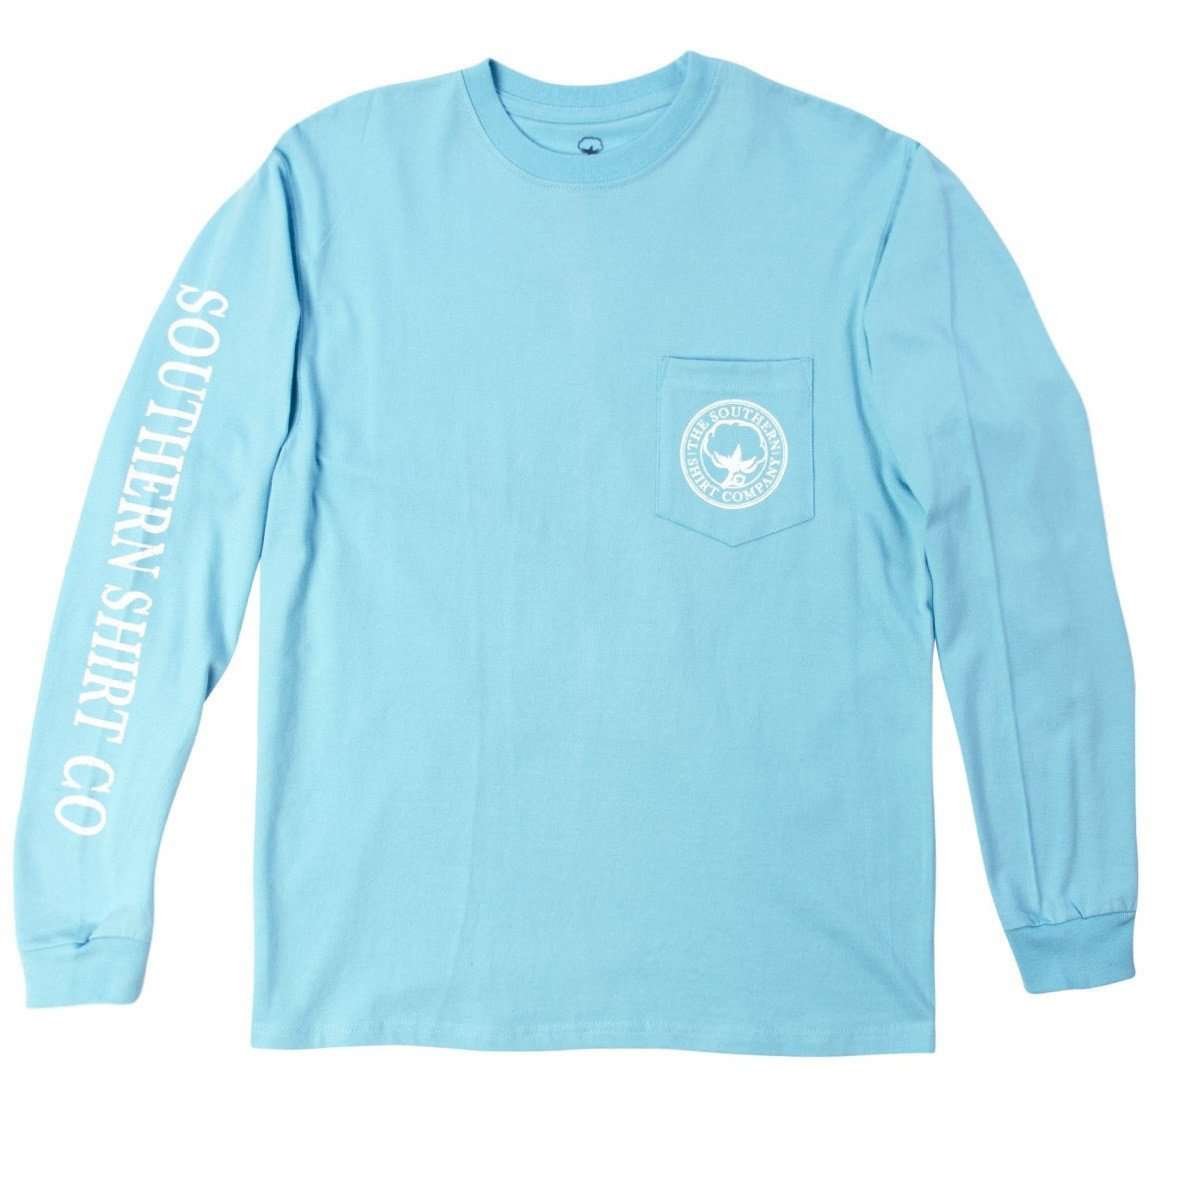 Southern Shirt Company Seaside Logo Long Sleeve Tee in Atlas Blue ...